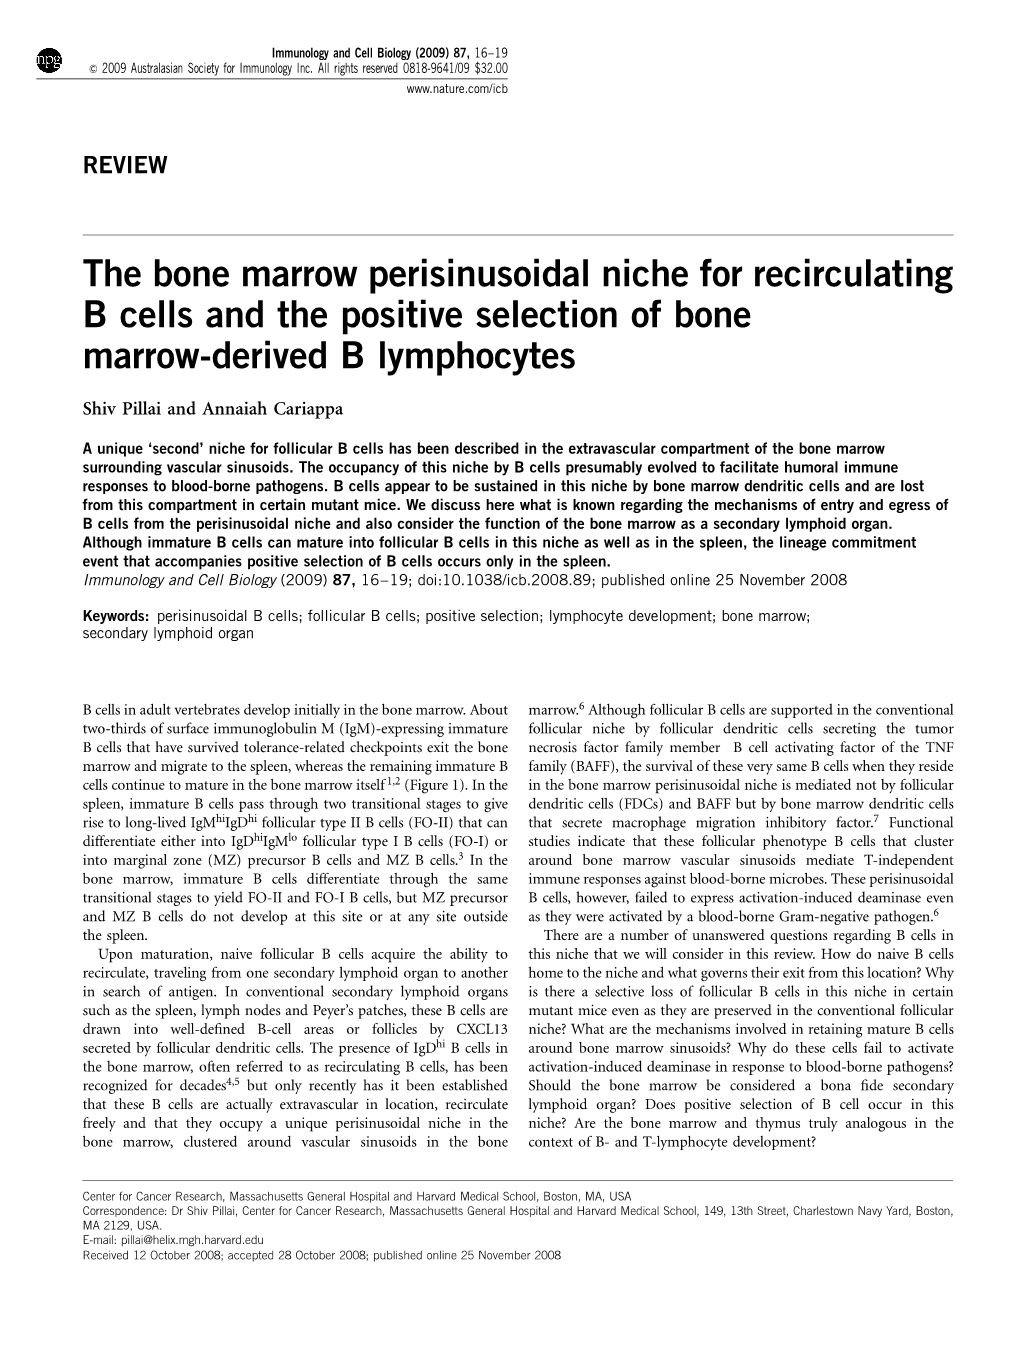 The Bone Marrow Perisinusoidal Niche for Recirculating B Cells and the Positive Selection of Bone Marrow-Derived B Lymphocytes